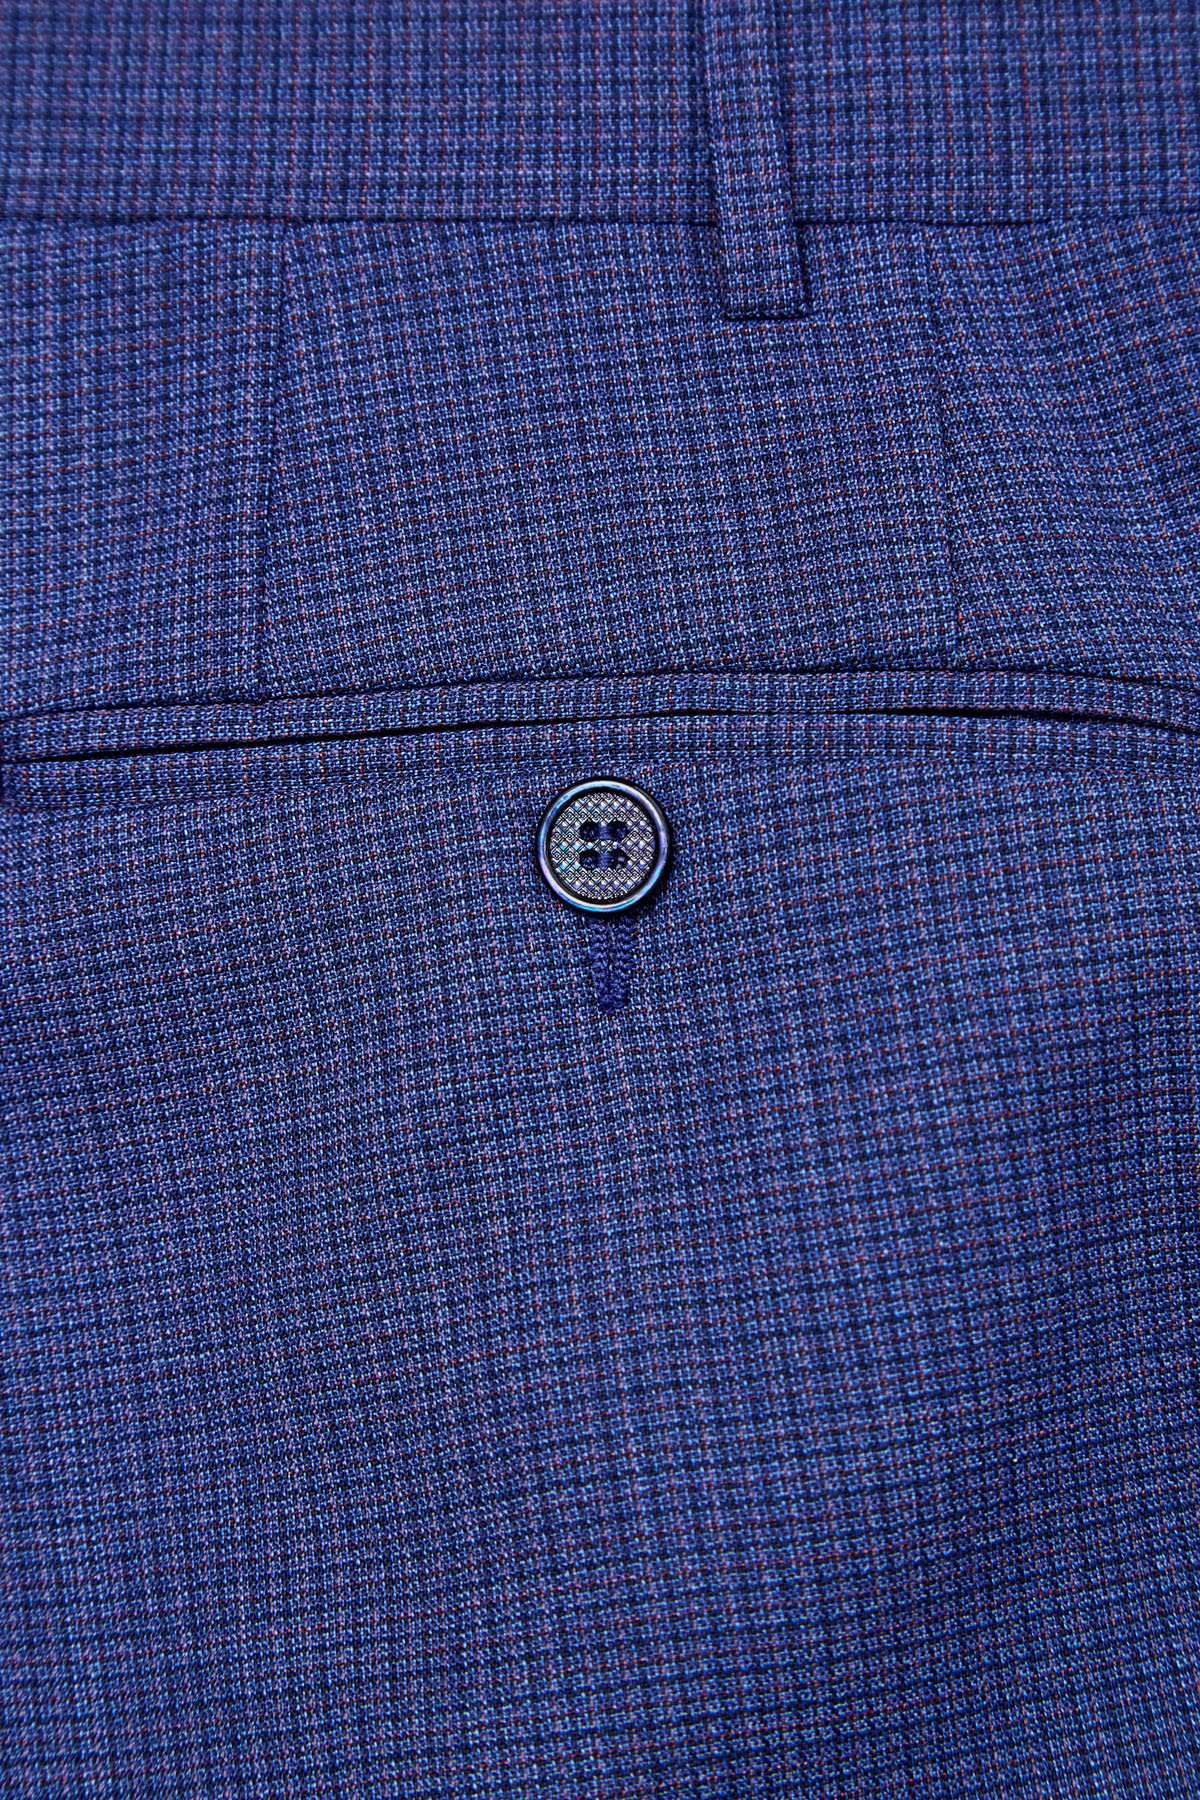 Костюм из шерстяной ткани Impeccabile с микро-принтом CANALI, цвет синий, размер 56;58;60;62 - фото 5